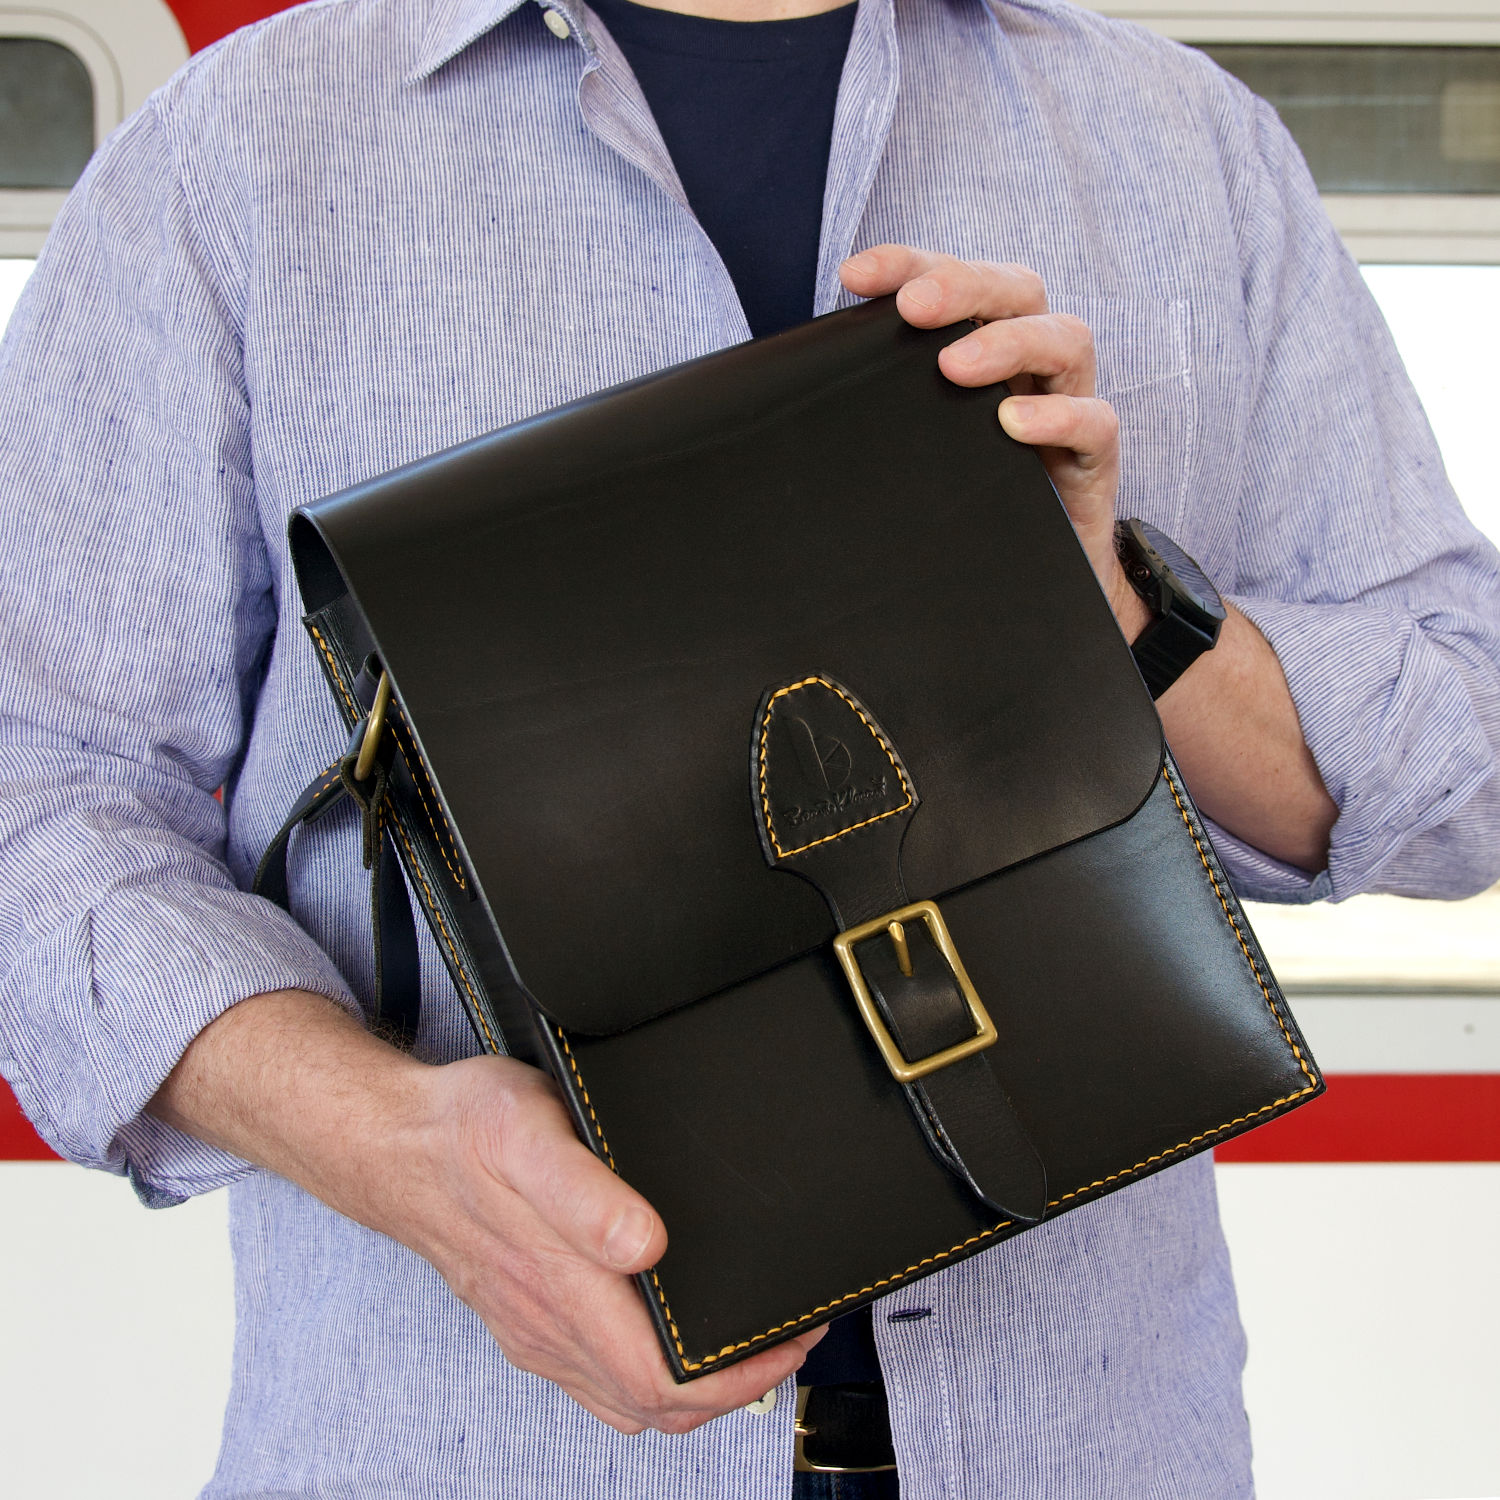 kožená messenger taška s mosadznou prackou držaná v rukách